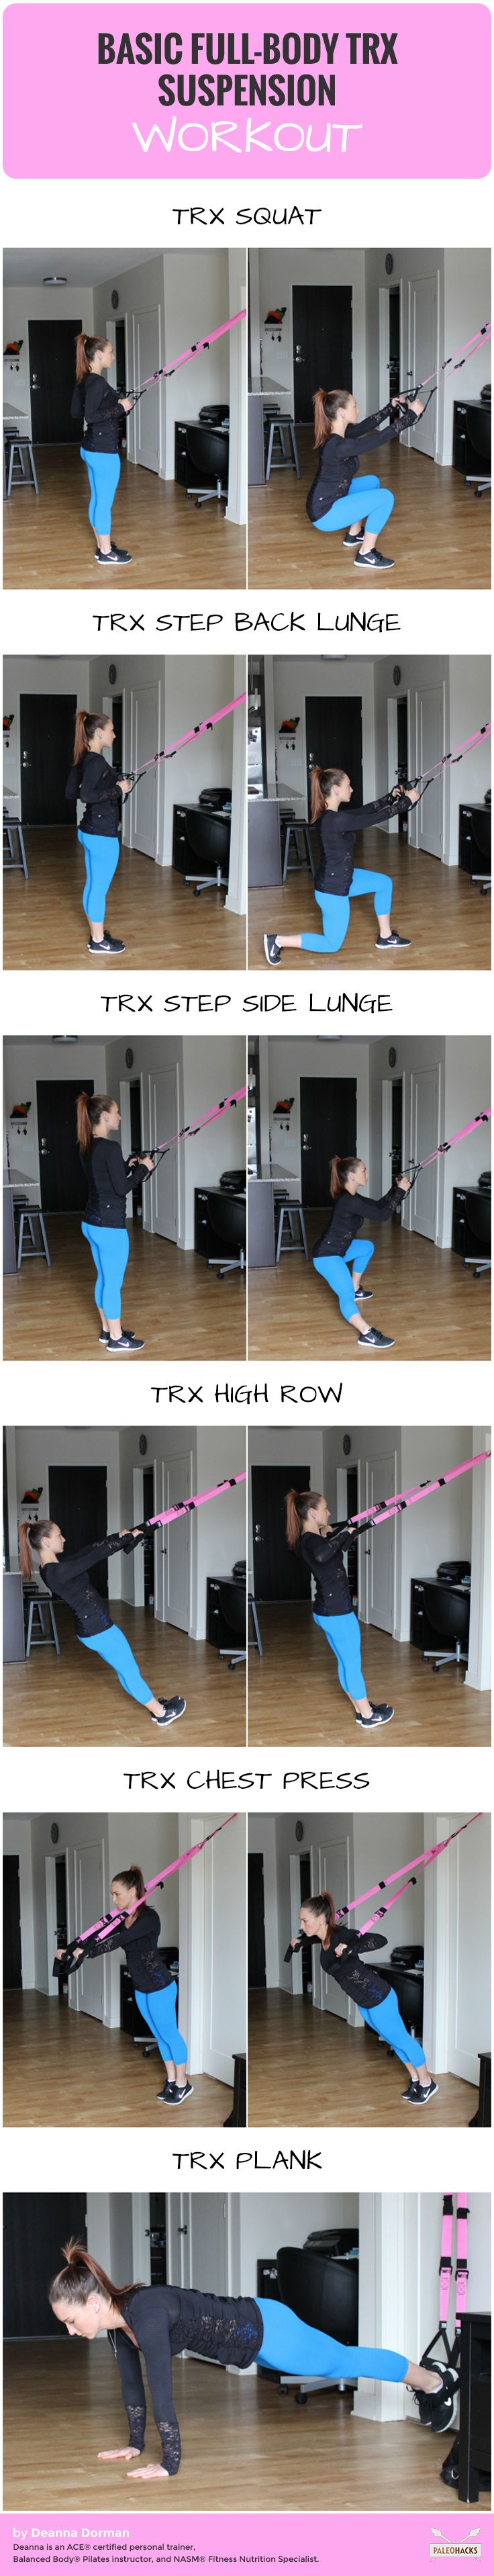 Basic Full Body TRX Suspension Workout